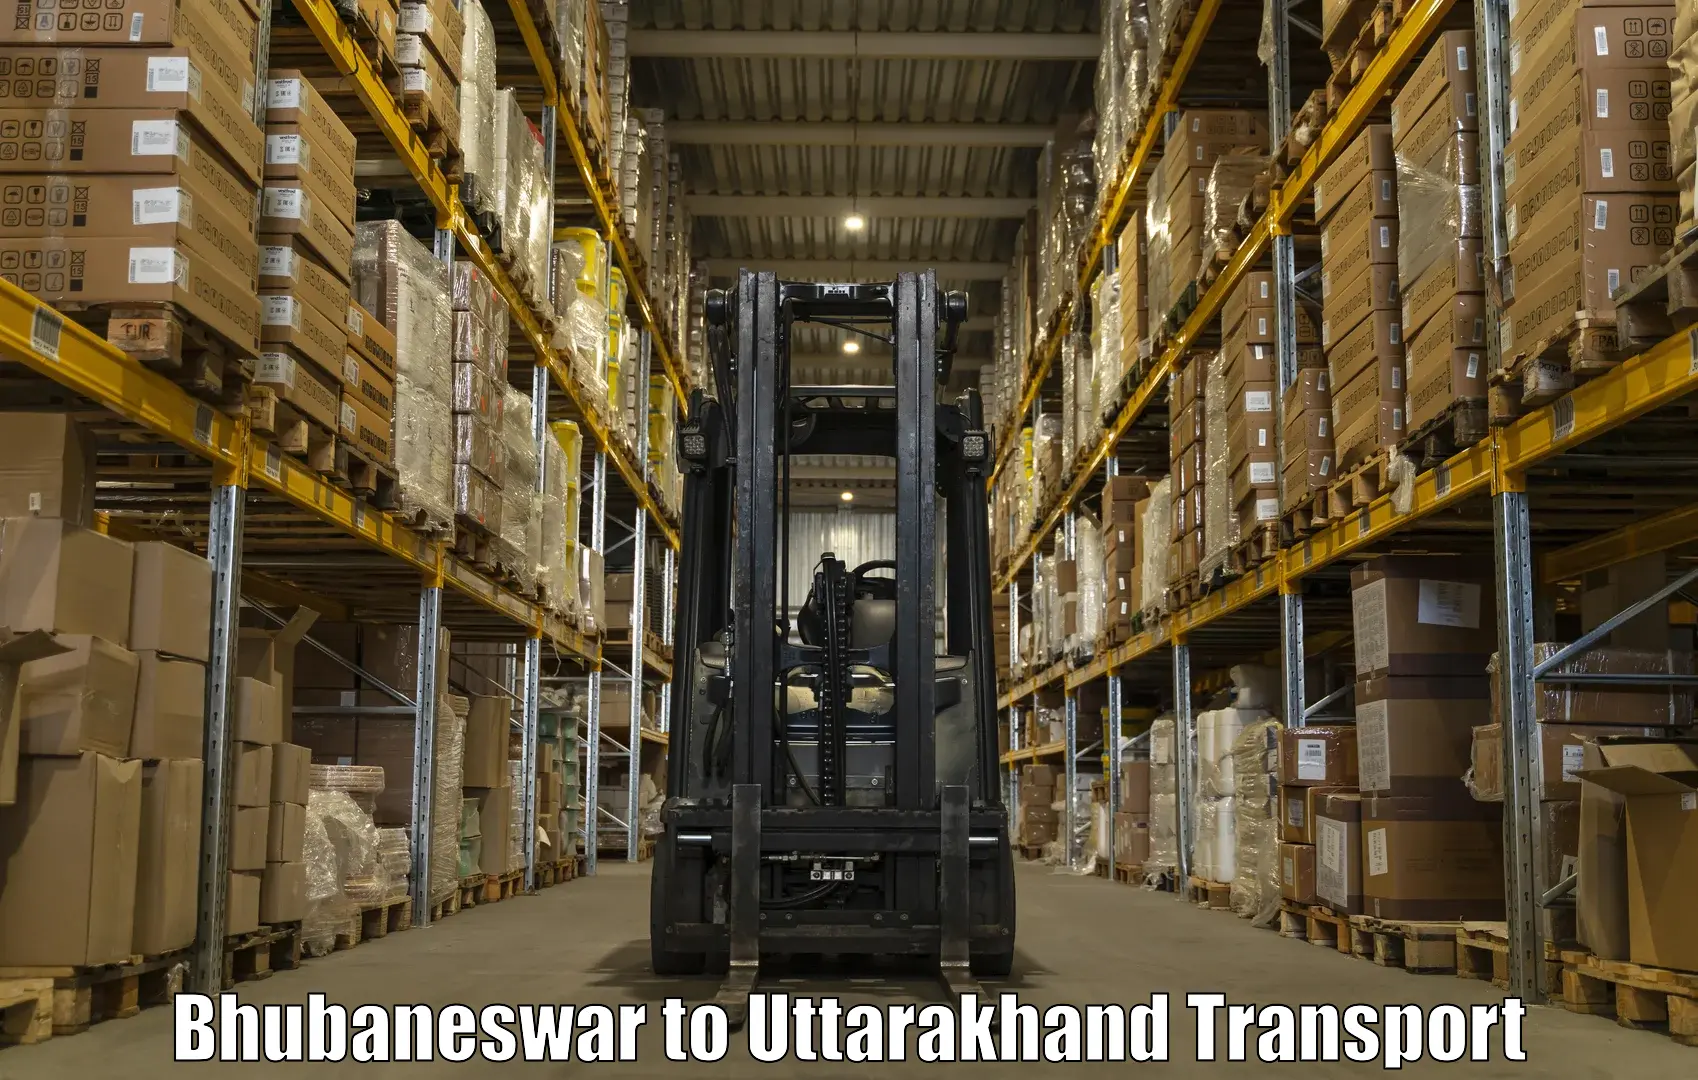 Truck transport companies in India Bhubaneswar to Dehradun